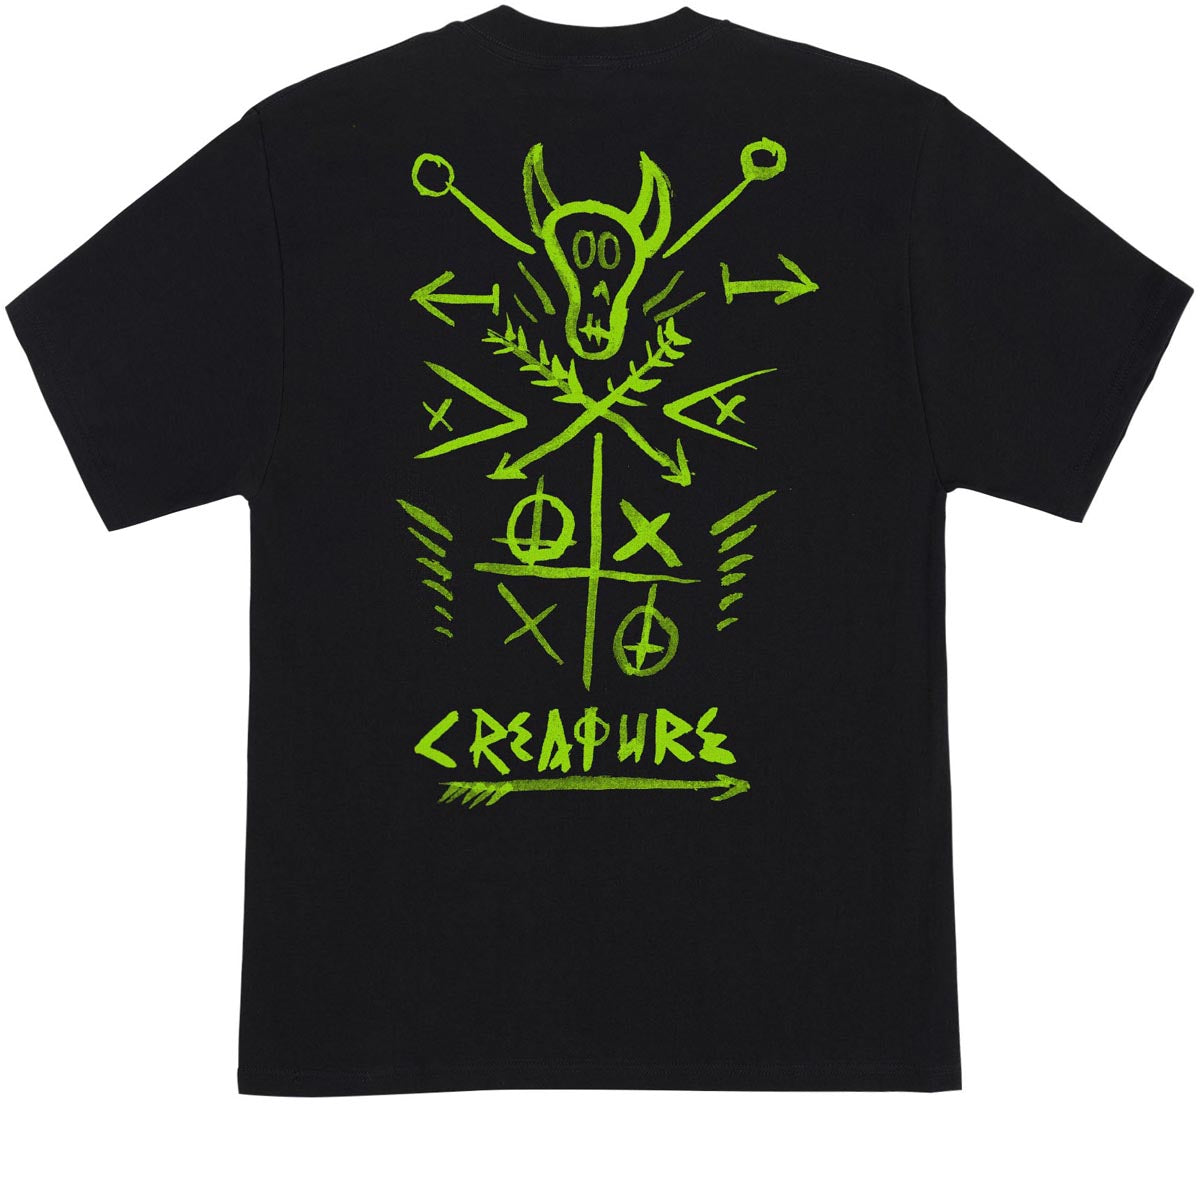 Creature Visualz T-Shirt - Black image 1